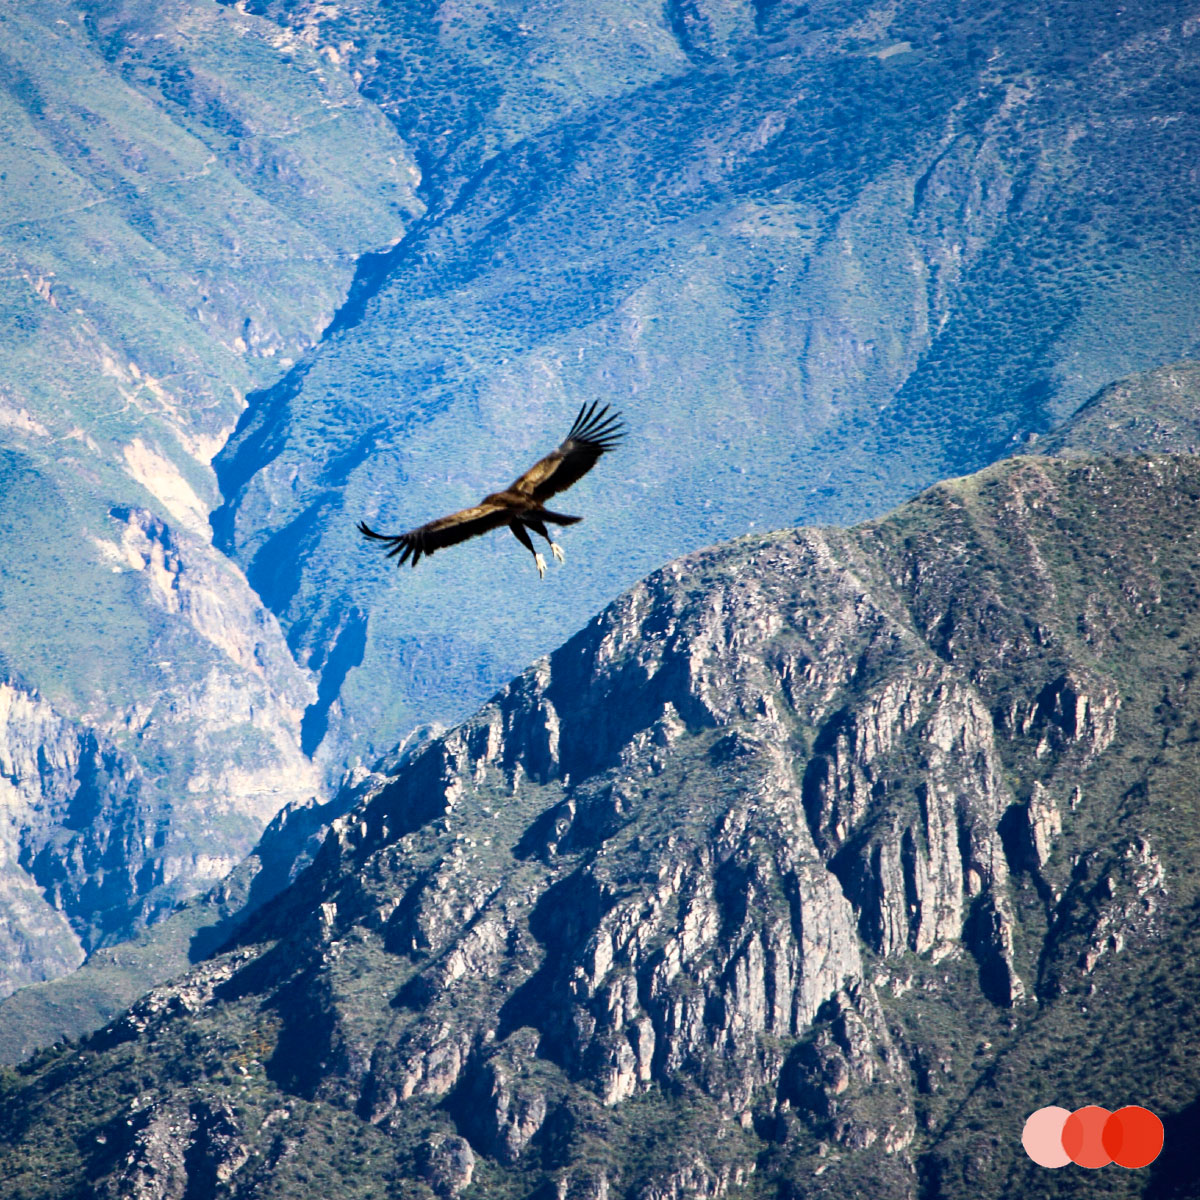 Mirador del Condor, Peru